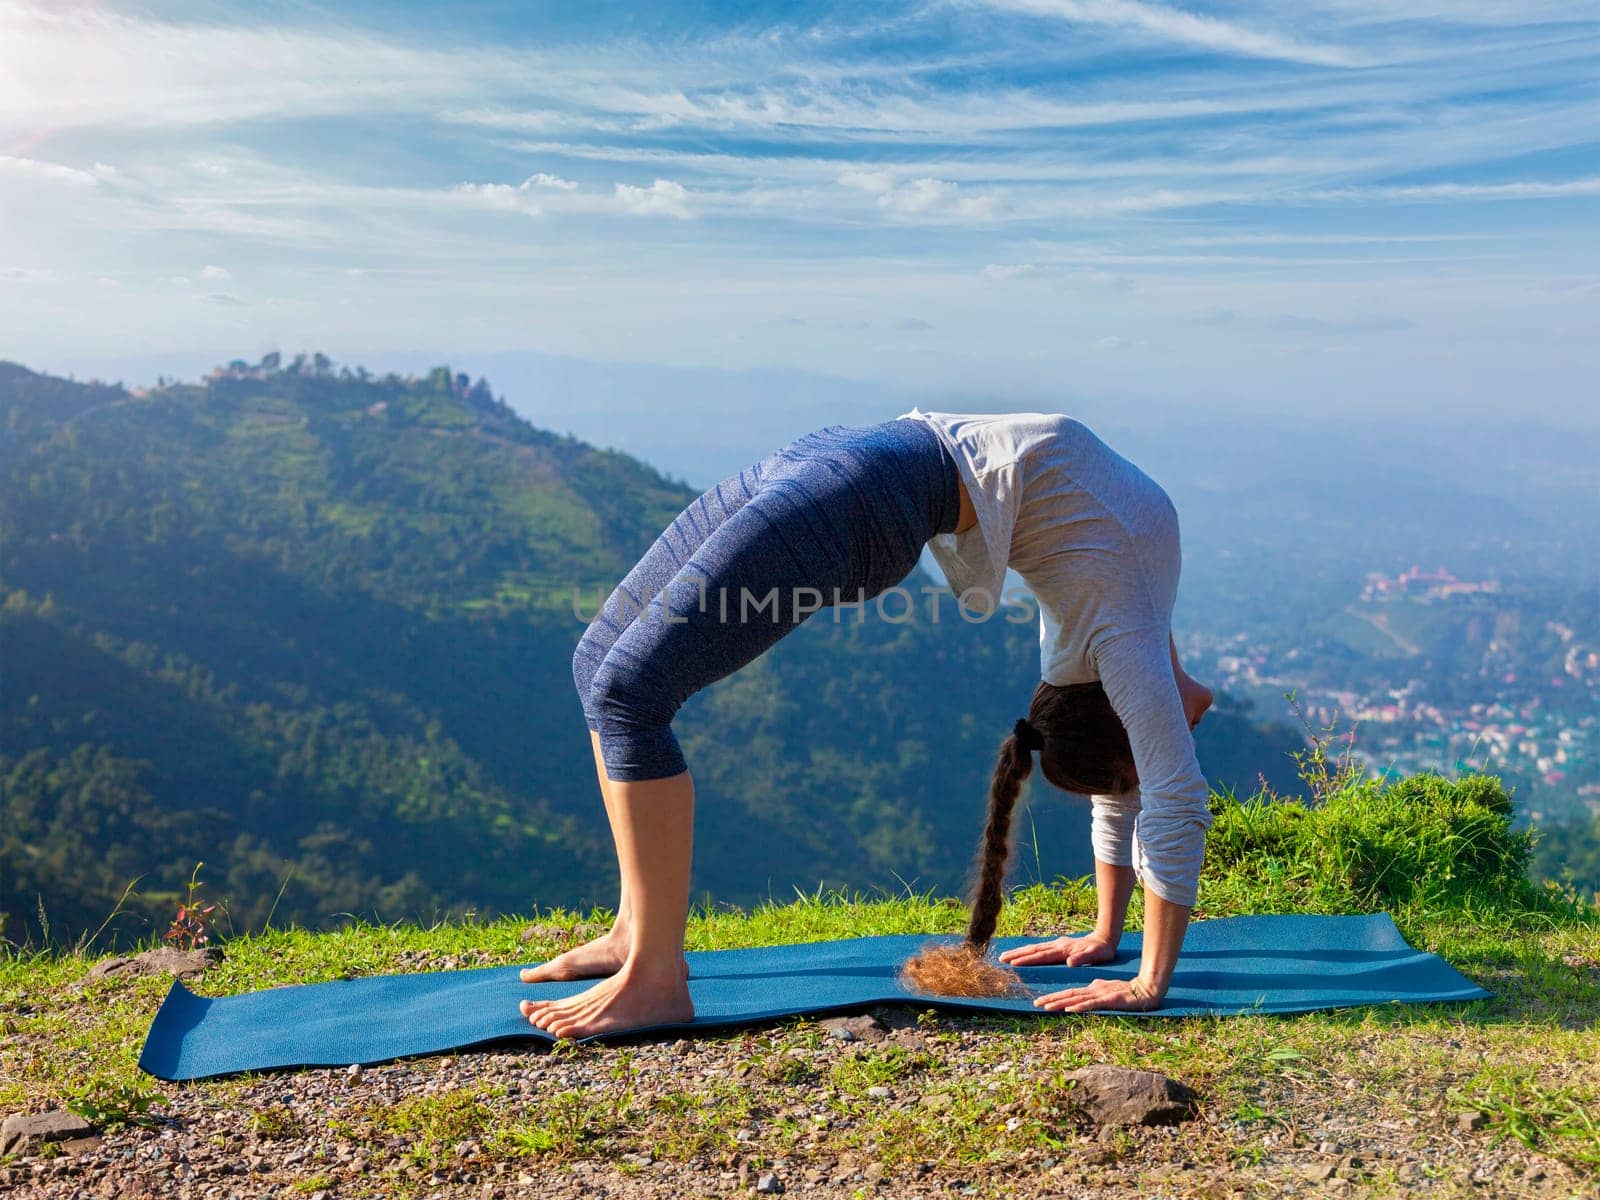 Yoga outdoors - young sporty fit woman doing Ashtanga Vinyasa Yoga asana Urdhva Dhanurasana - upward bow pose - in Himalayas mountains in the morning Himachal Pradesh, India